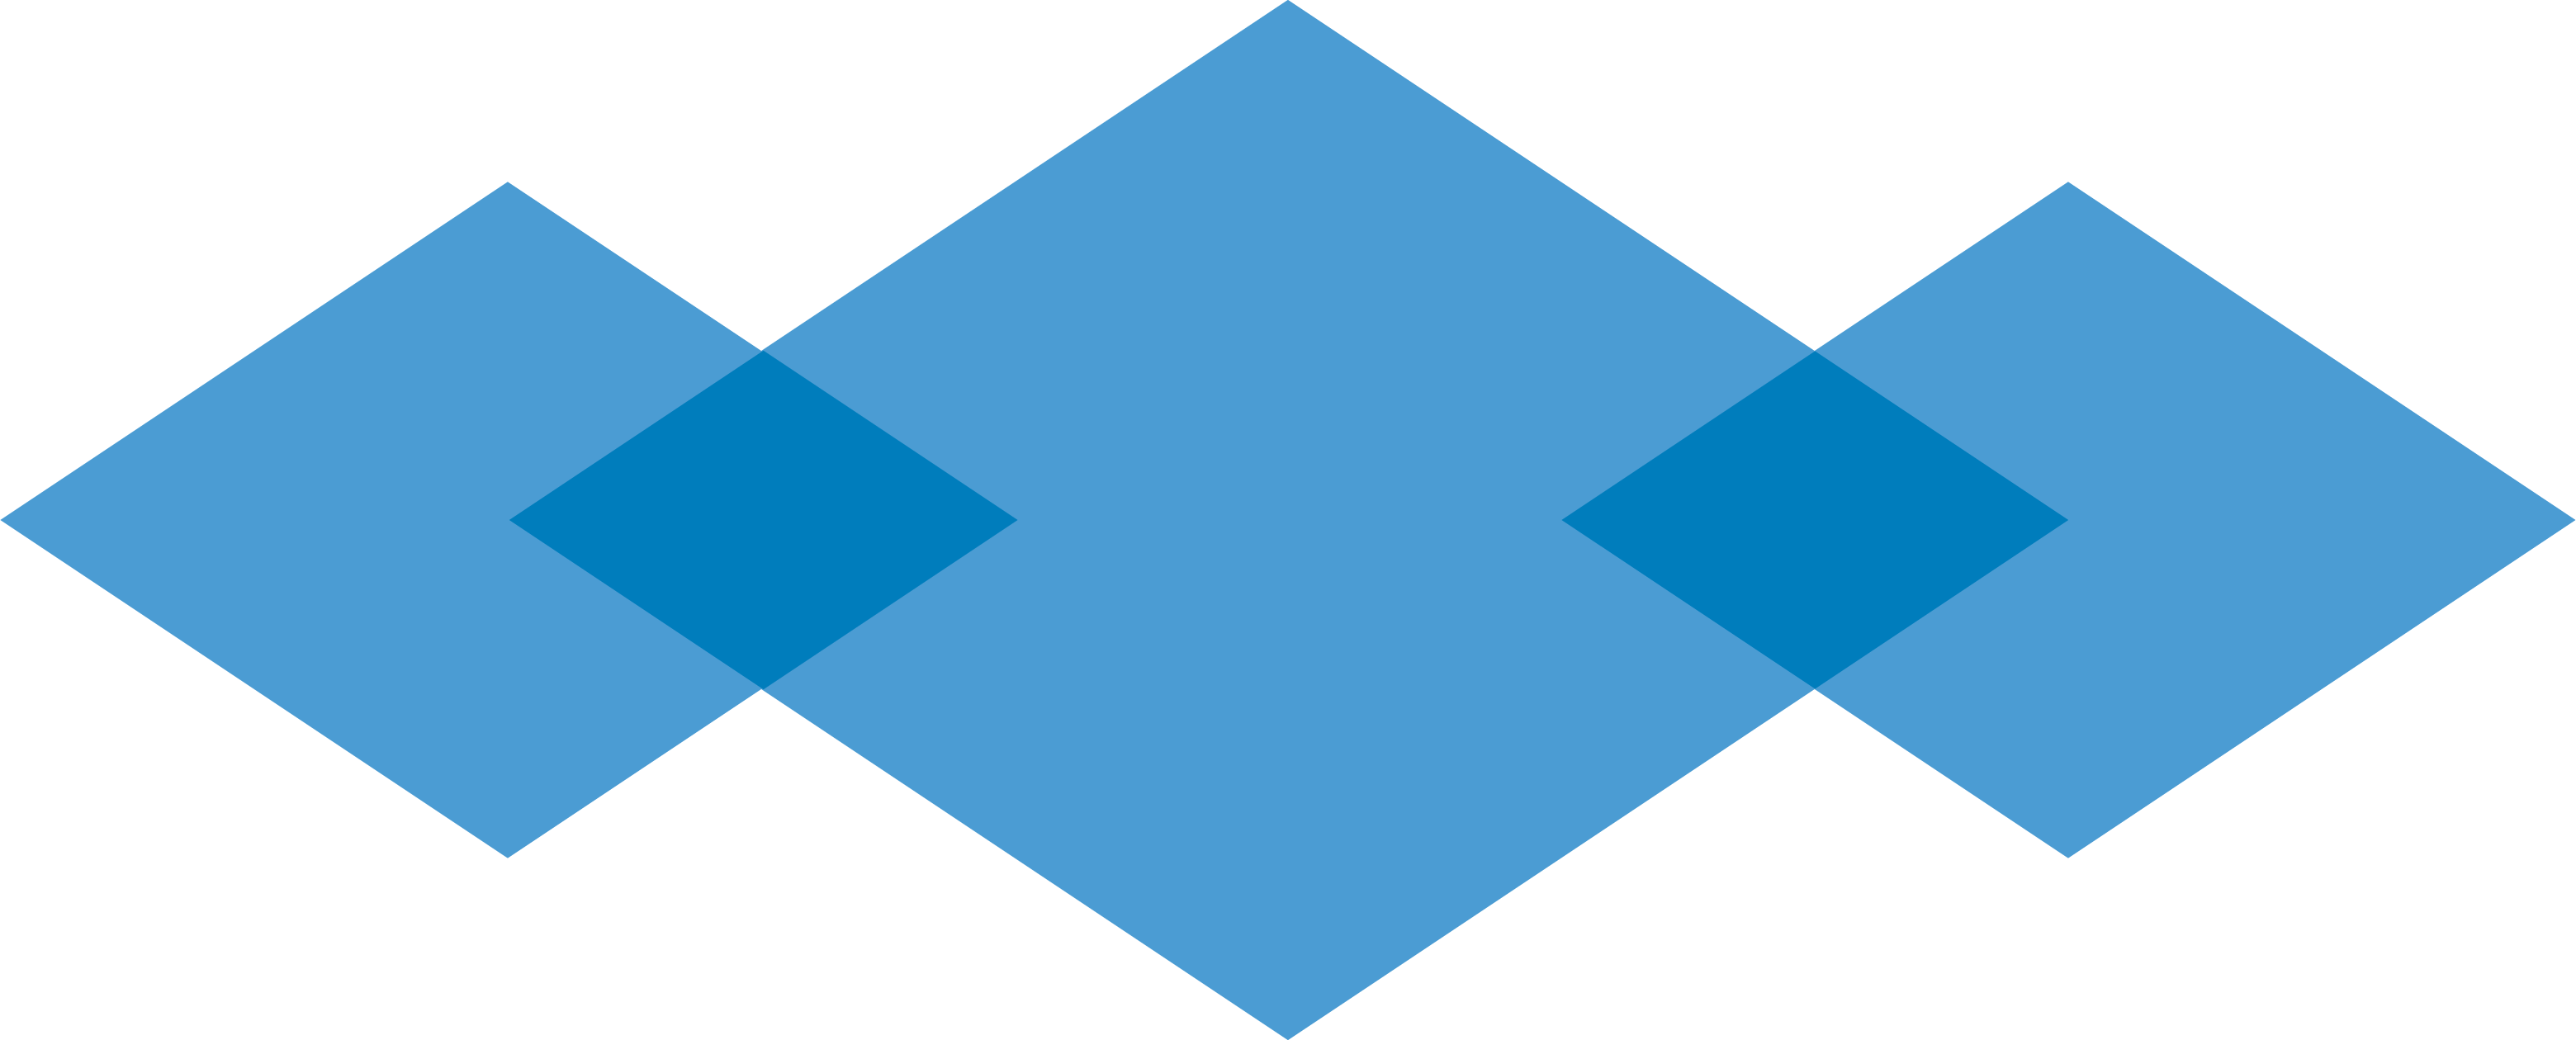 Three overlapping diamond shapes in Carolina Blue.